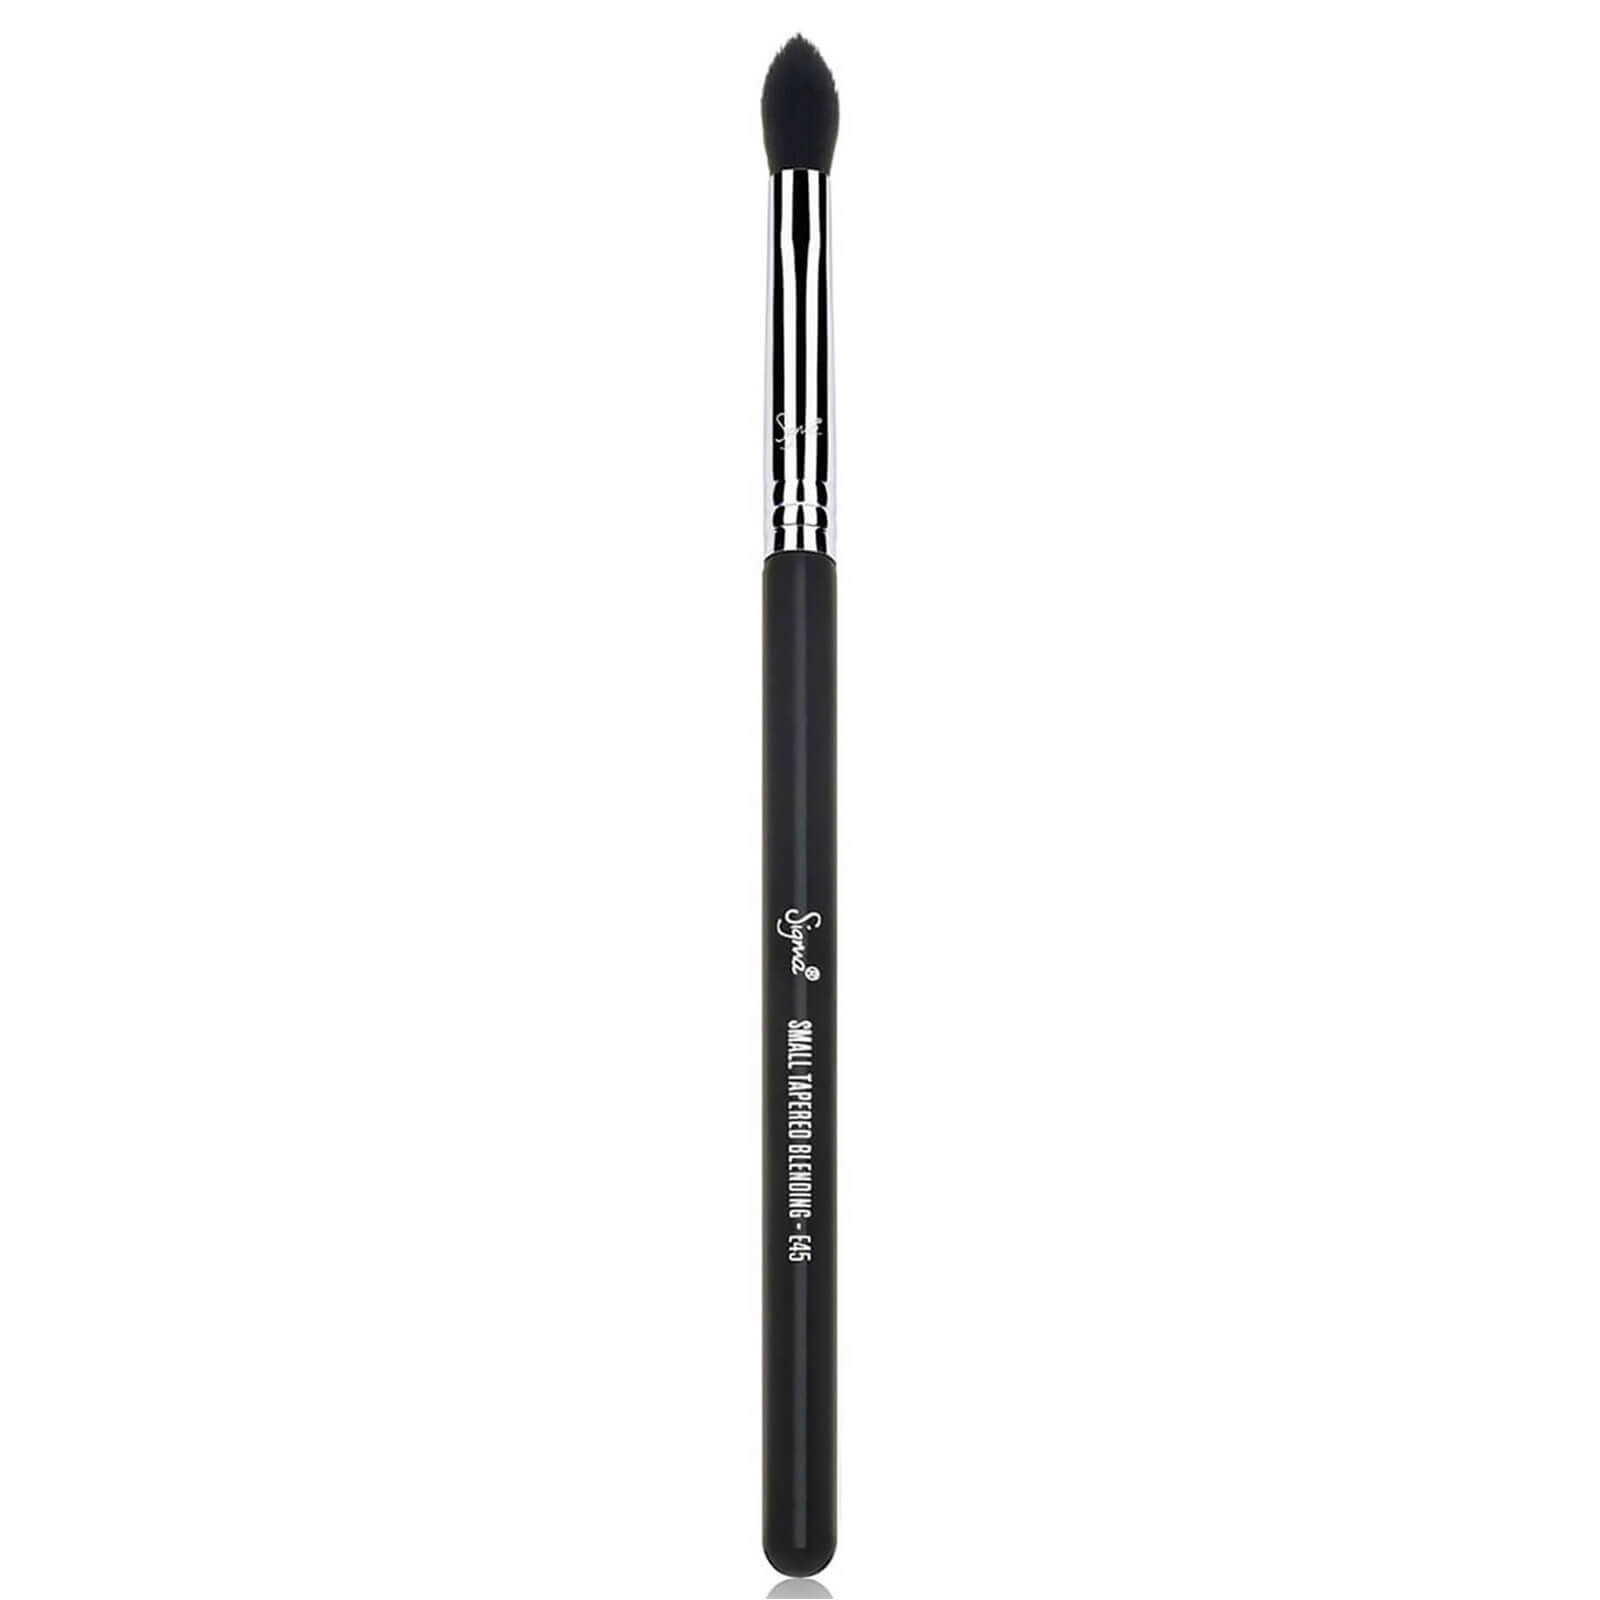 Sigma Beauty E45 - Small Tapered Blending Brush